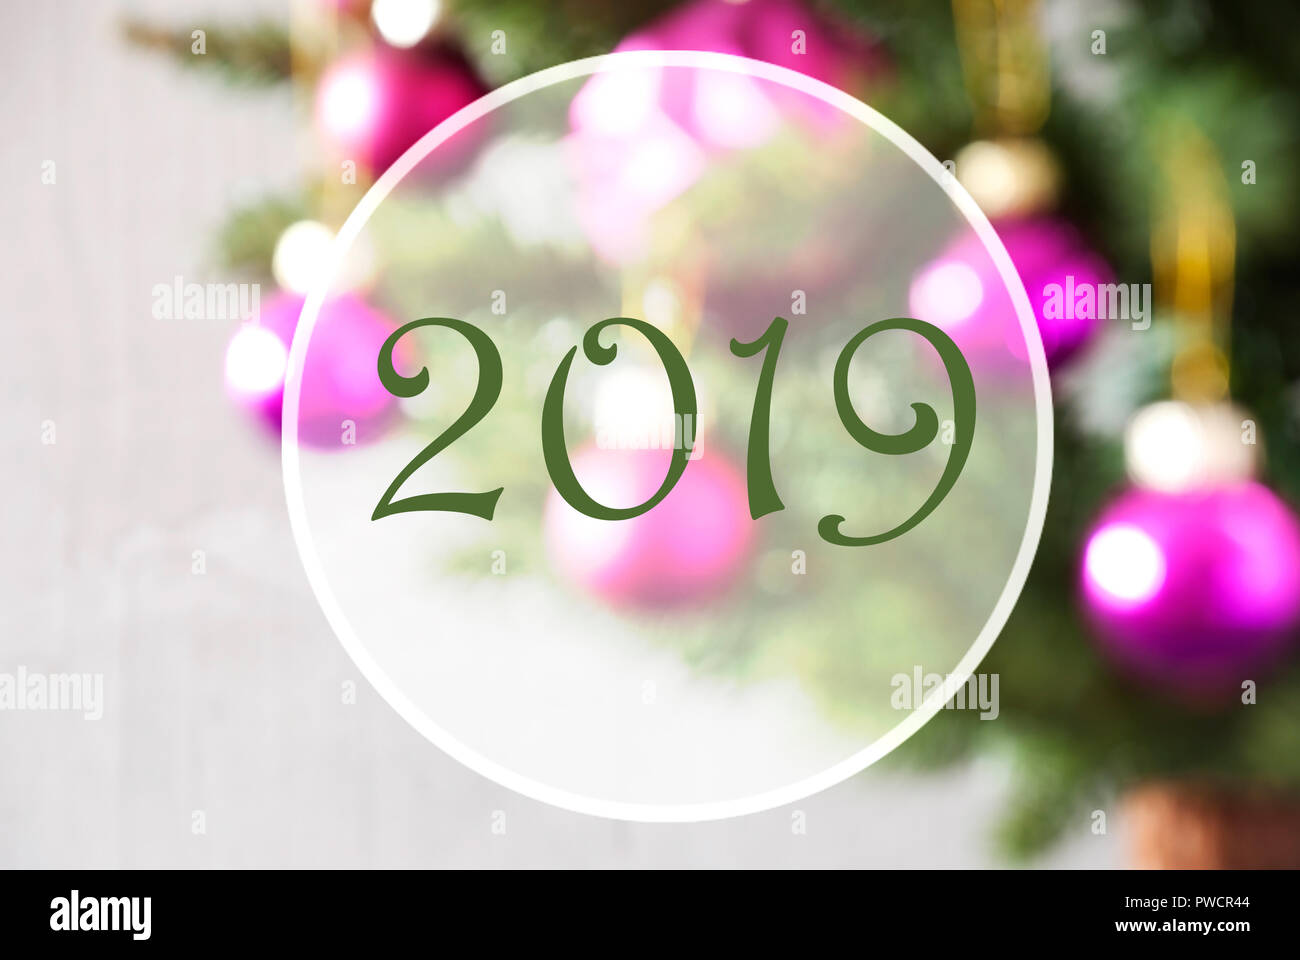 Blurry Balls, Rose Quartz, Text 2019, Christmas Tree Stock Photo